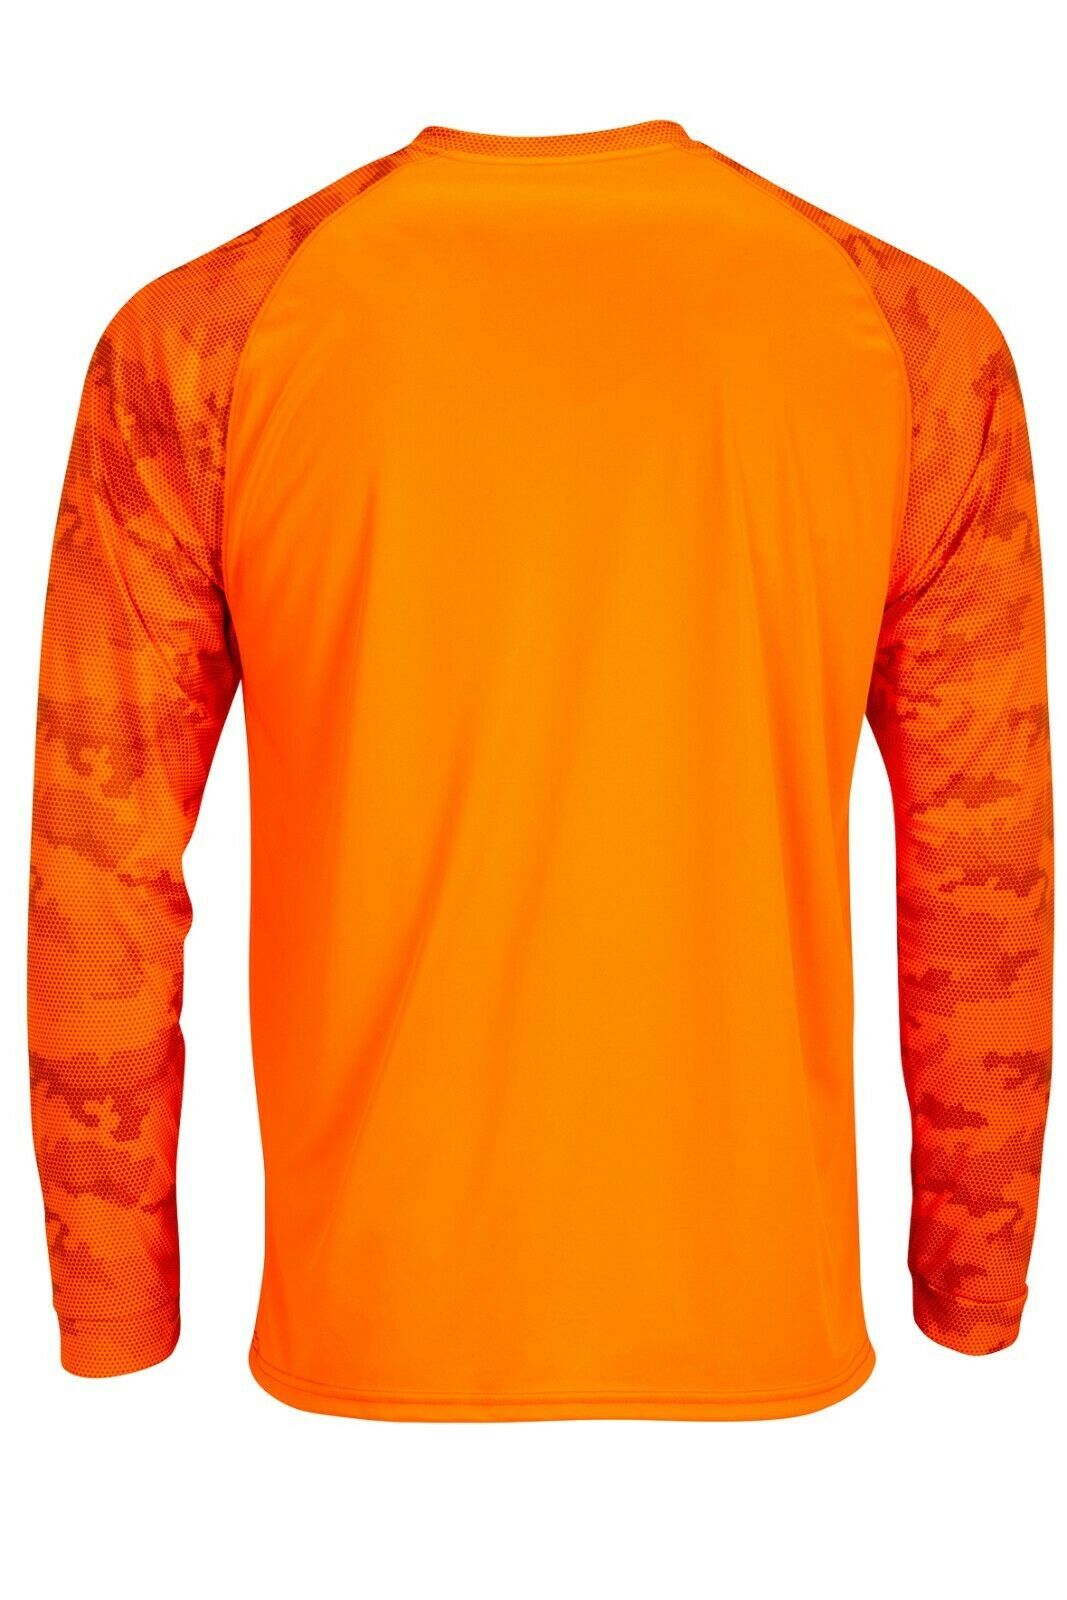 Sun Protection Long Camo Sleeve Dri Fit Neon Orange sunshirt base layer ...